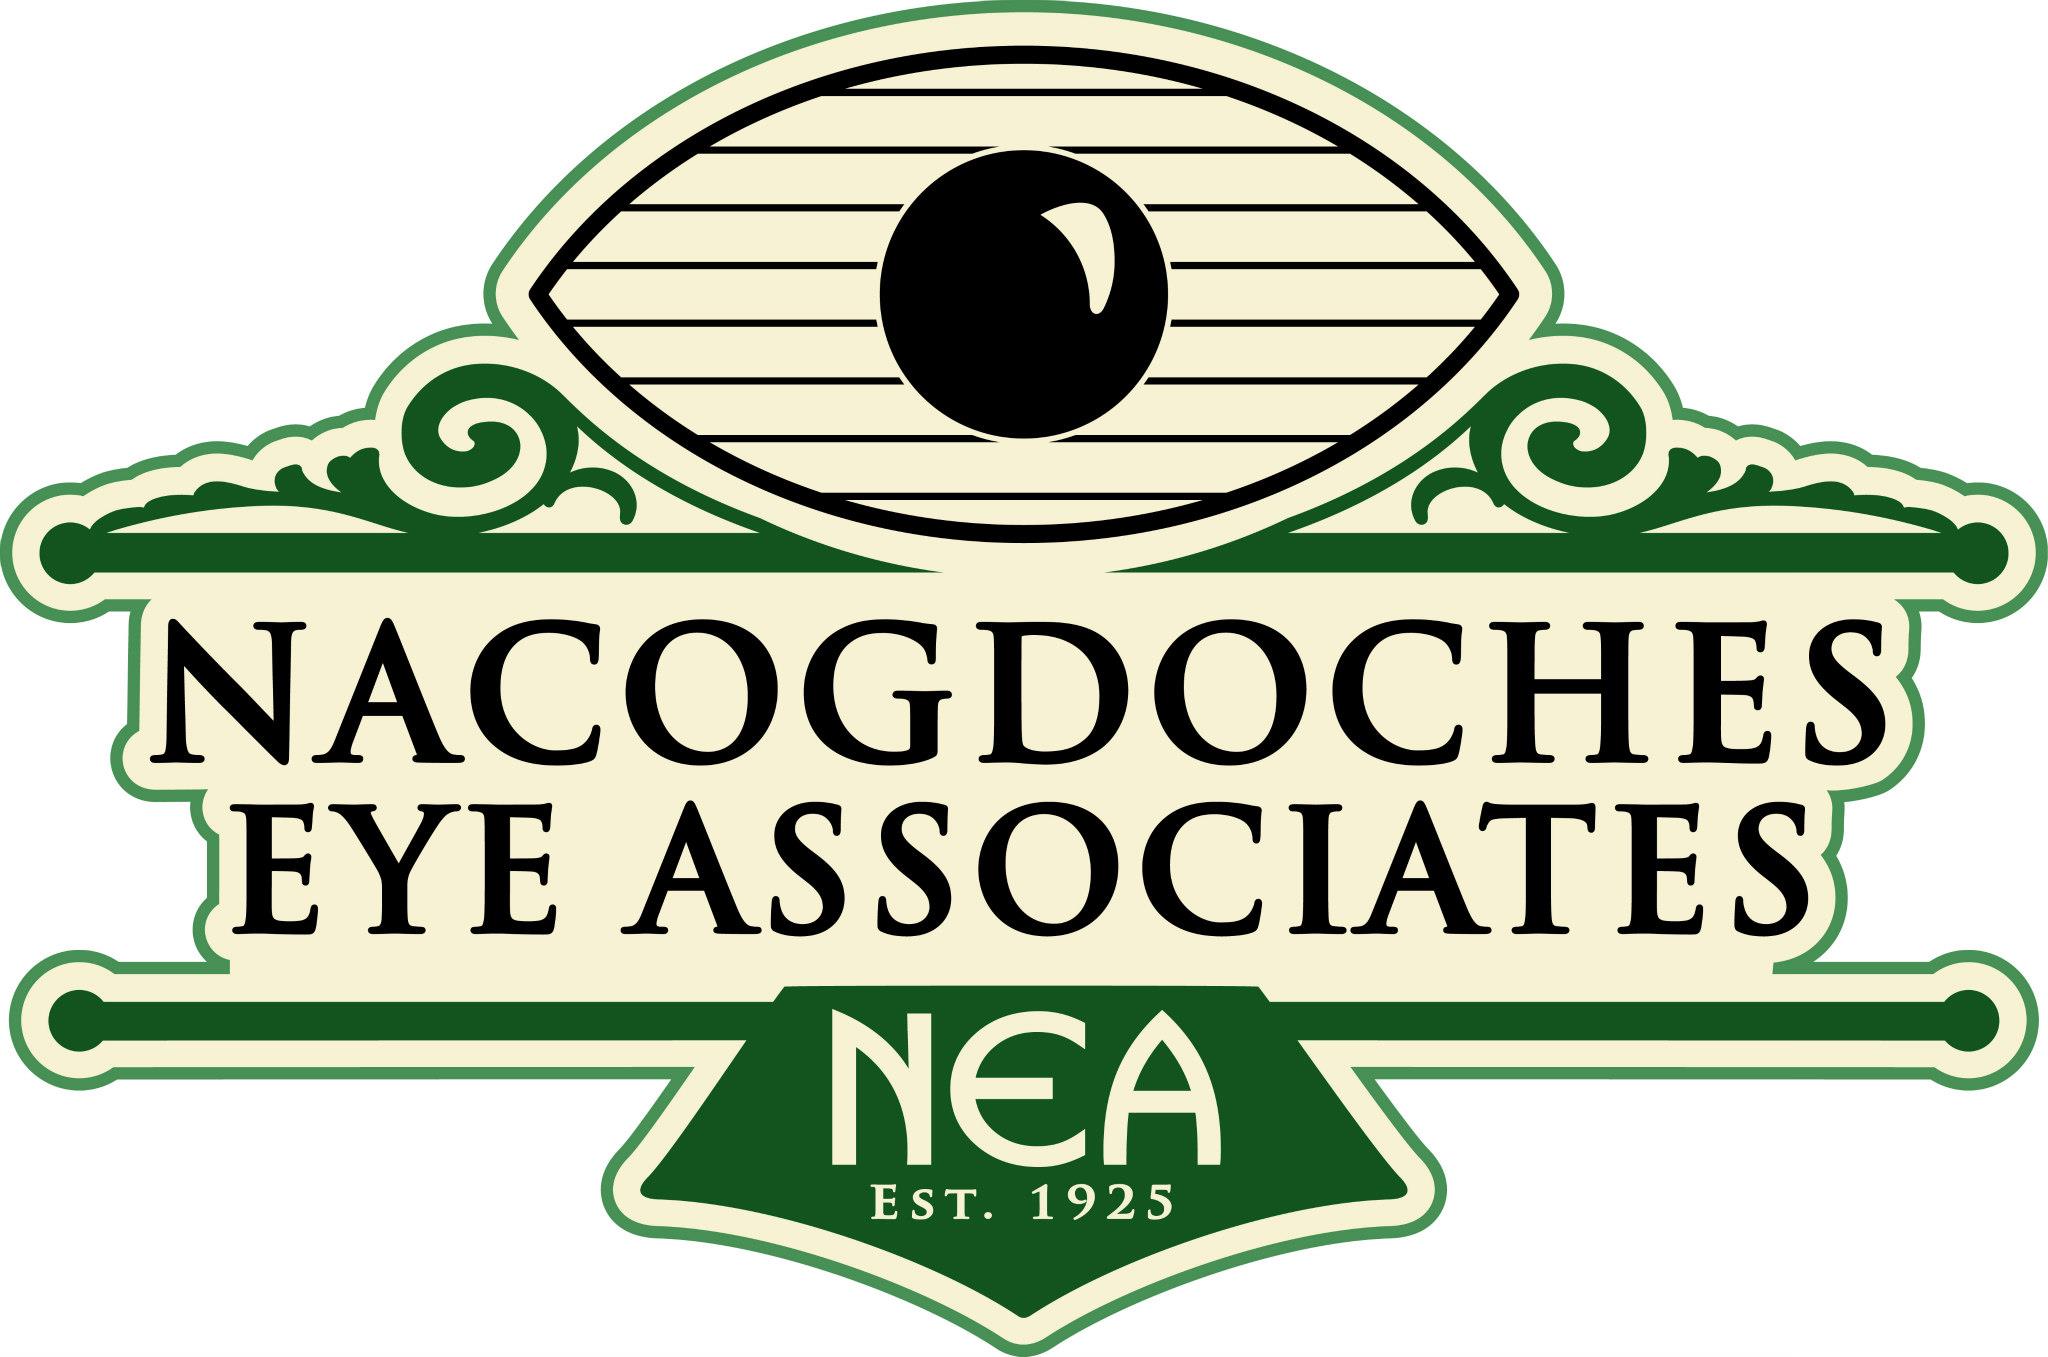 Nacogdoches Eye Associates